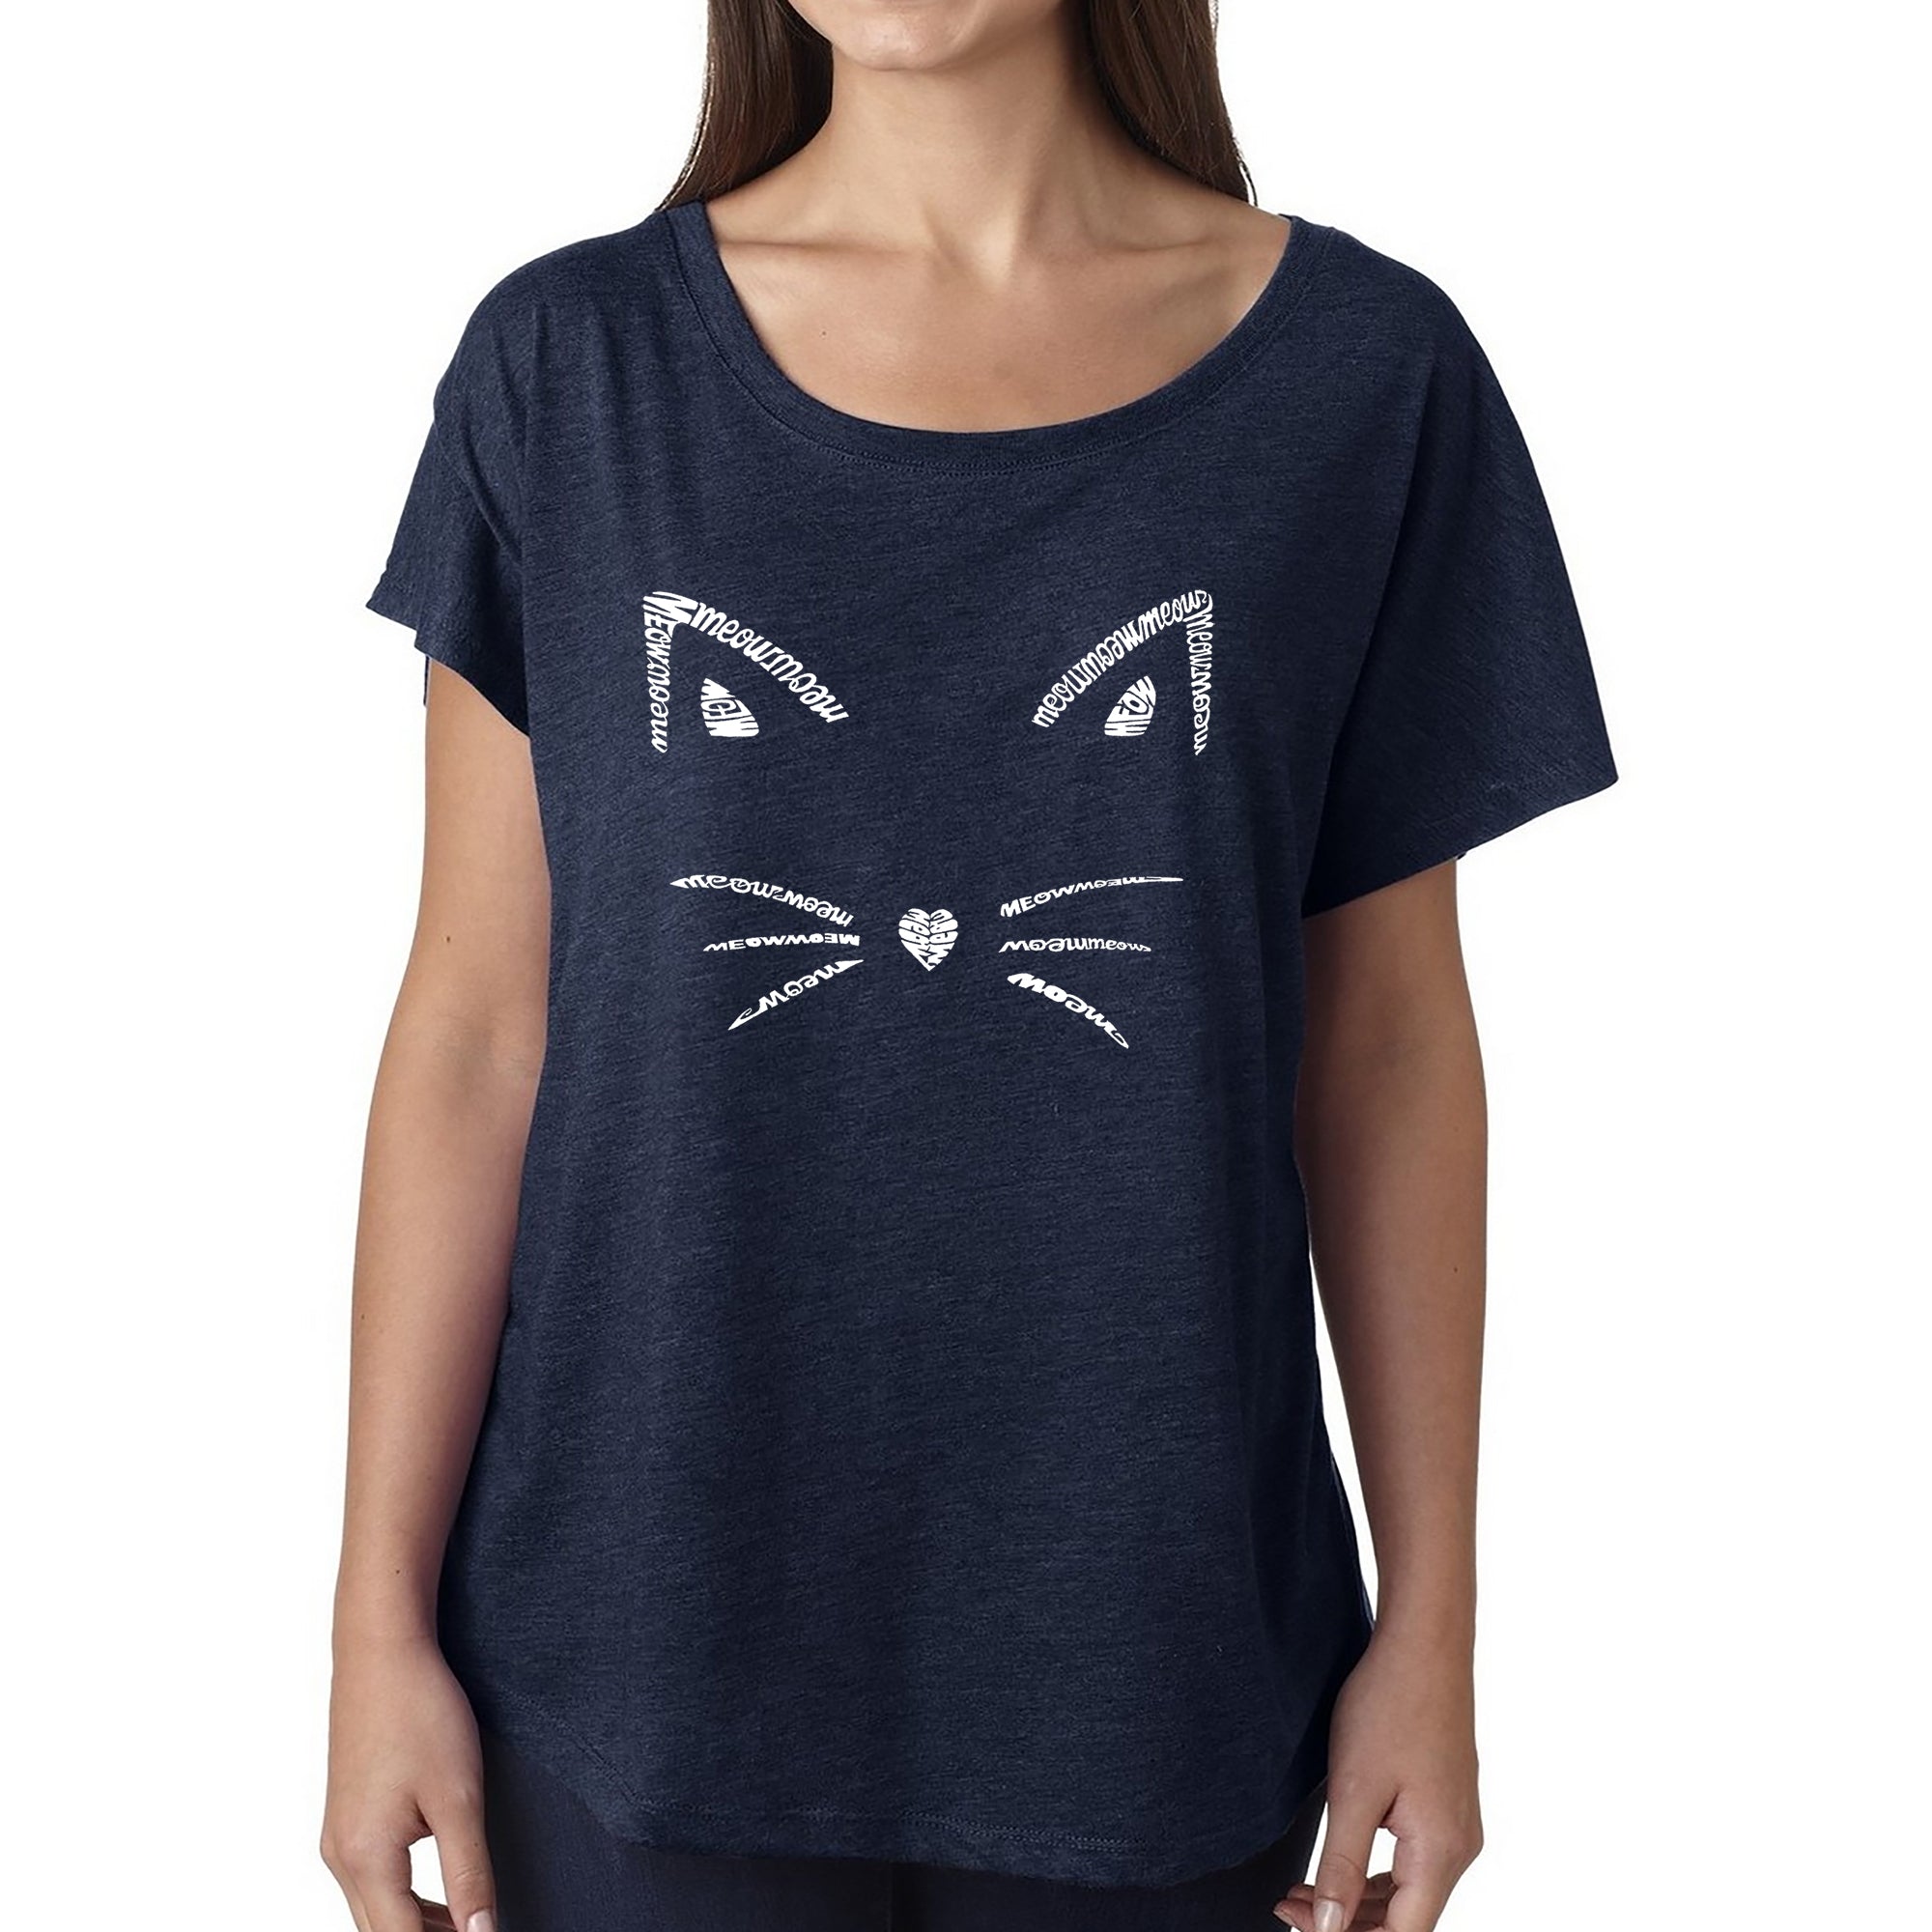 Whiskers - Women's Loose Fit Dolman Cut Word Art Shirt - Navy - Medium